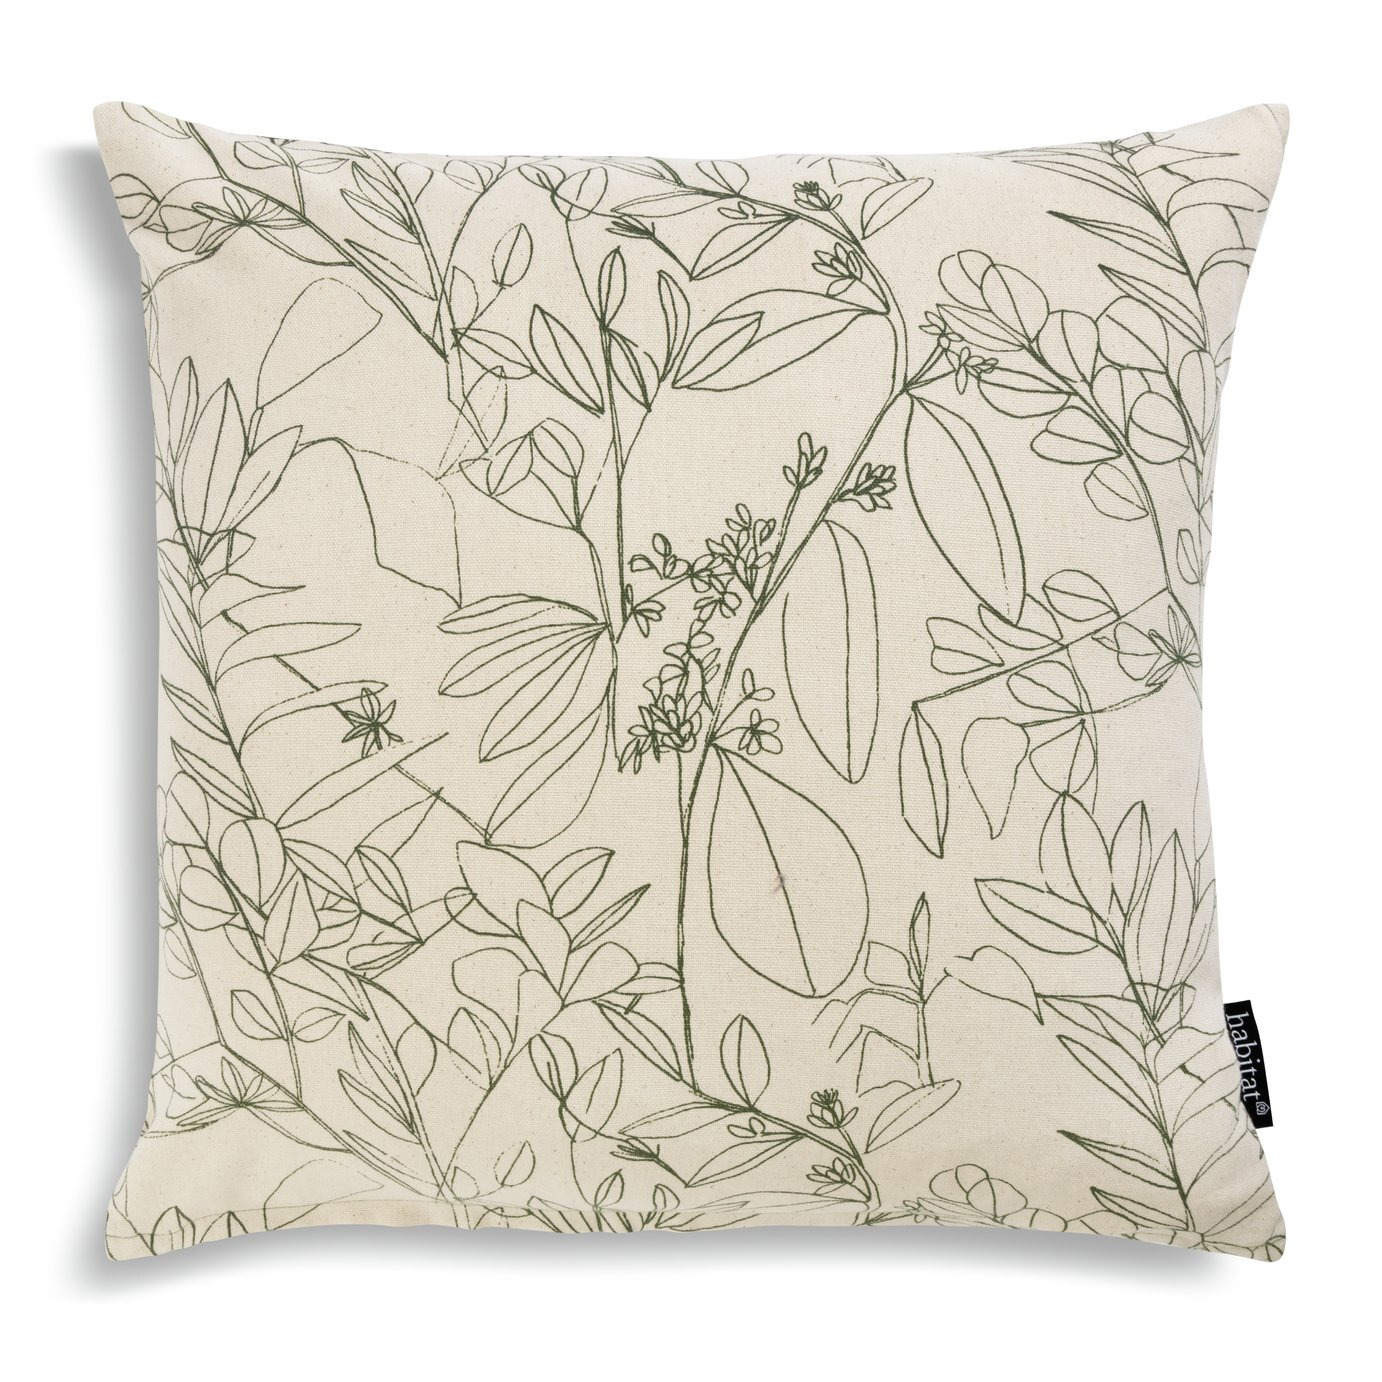 Habitat Floral Print Cushion - White & Green - 43x43cm - image 1